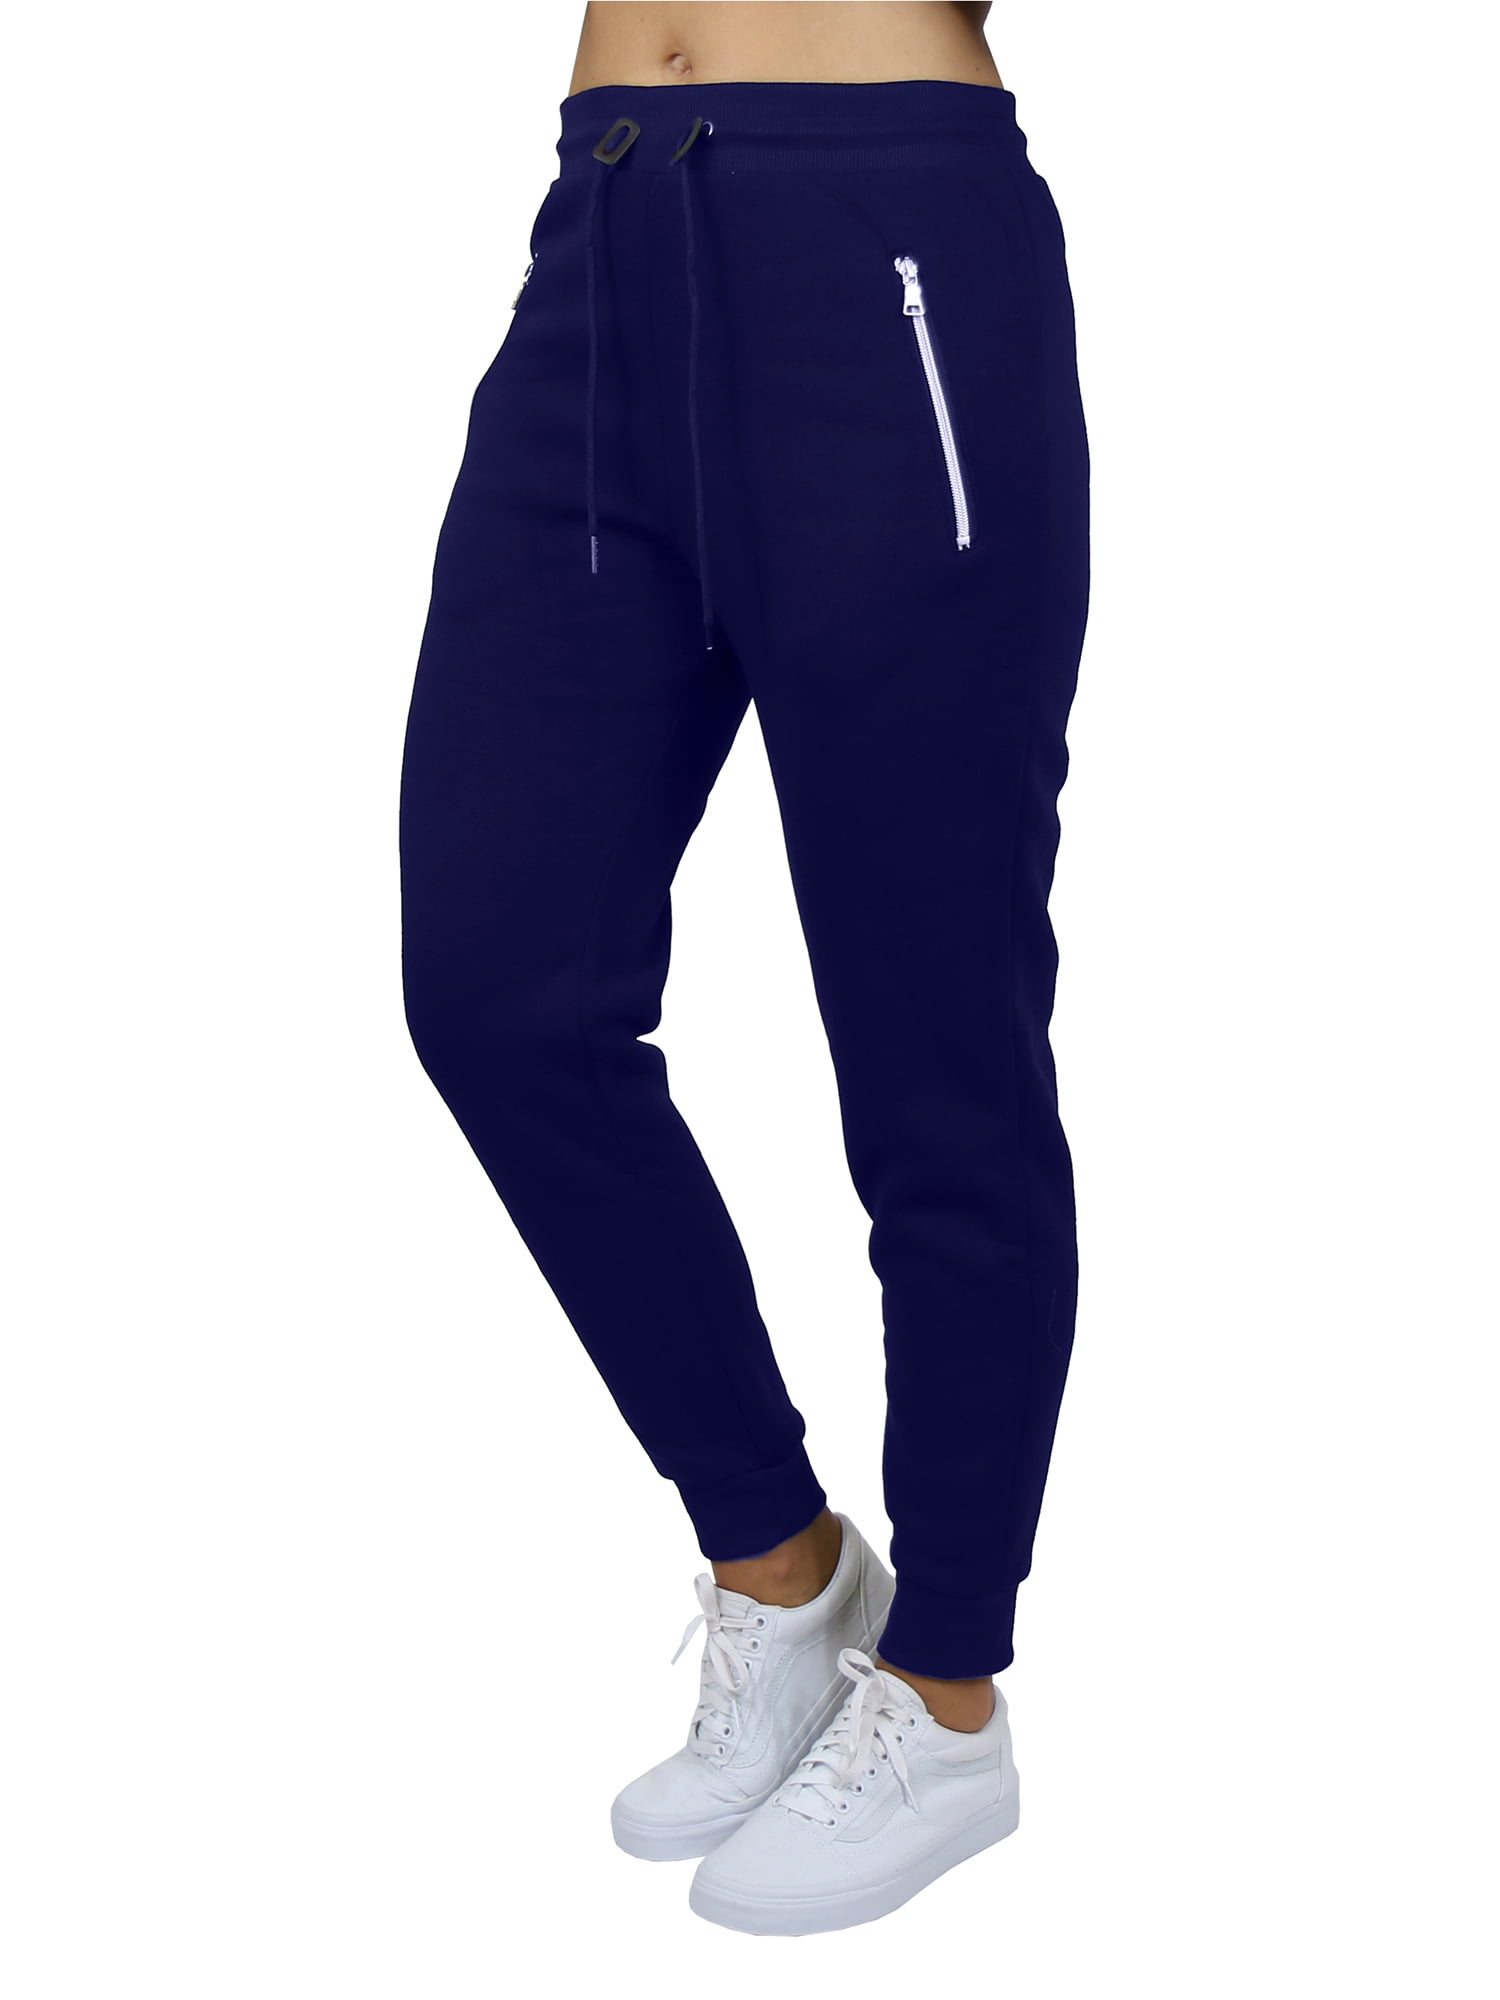 Range Sweatpants Womens XL (18) Knit Joggers Dark Blue Pockets Comfortable